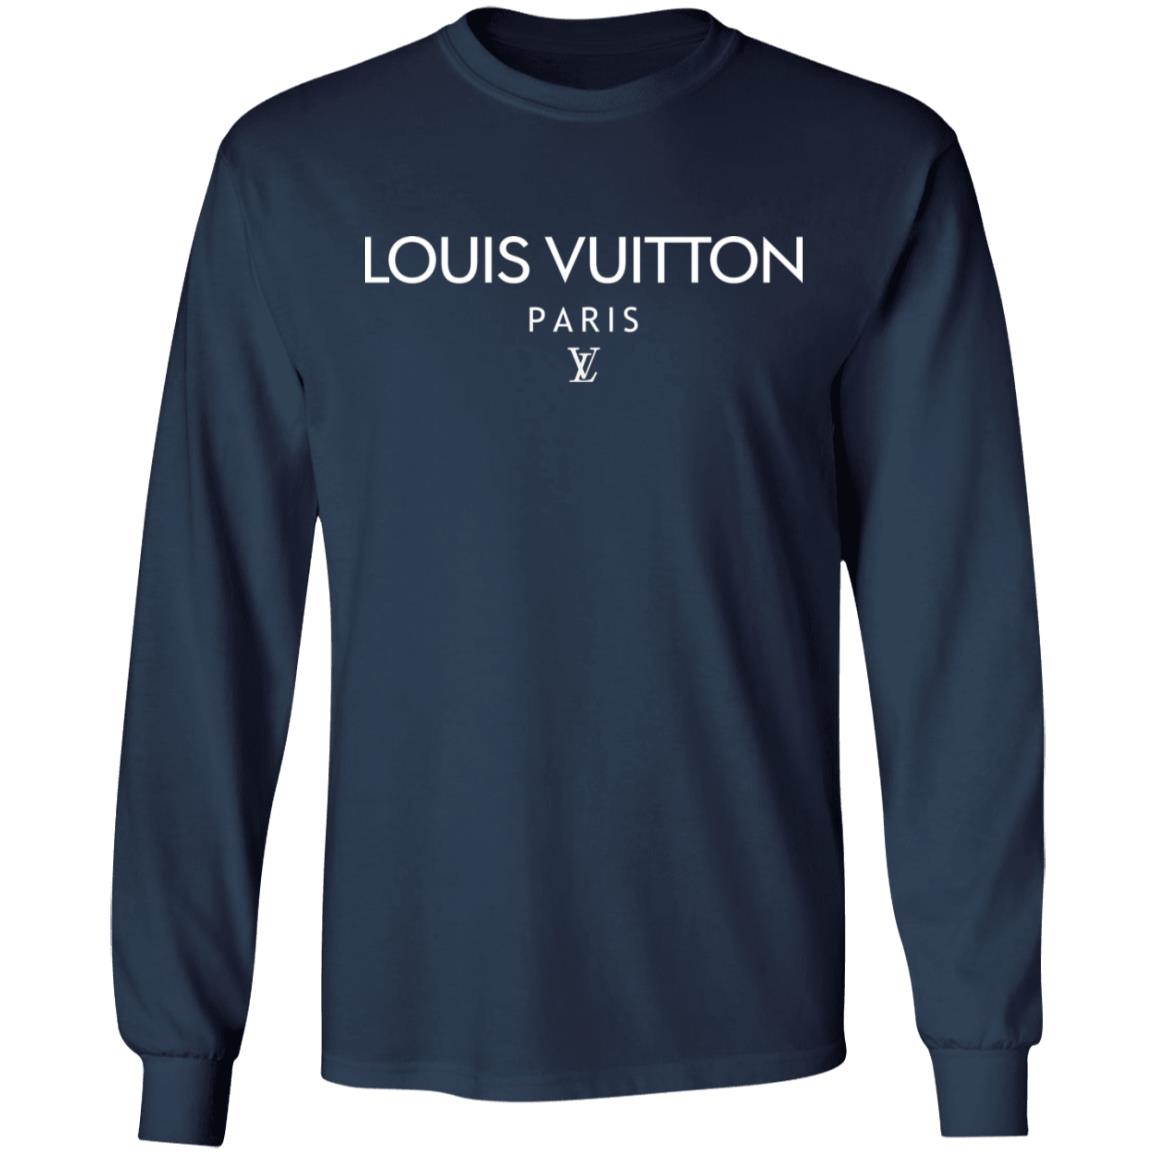 Louis Vuitton Paris shirt - Rockatee